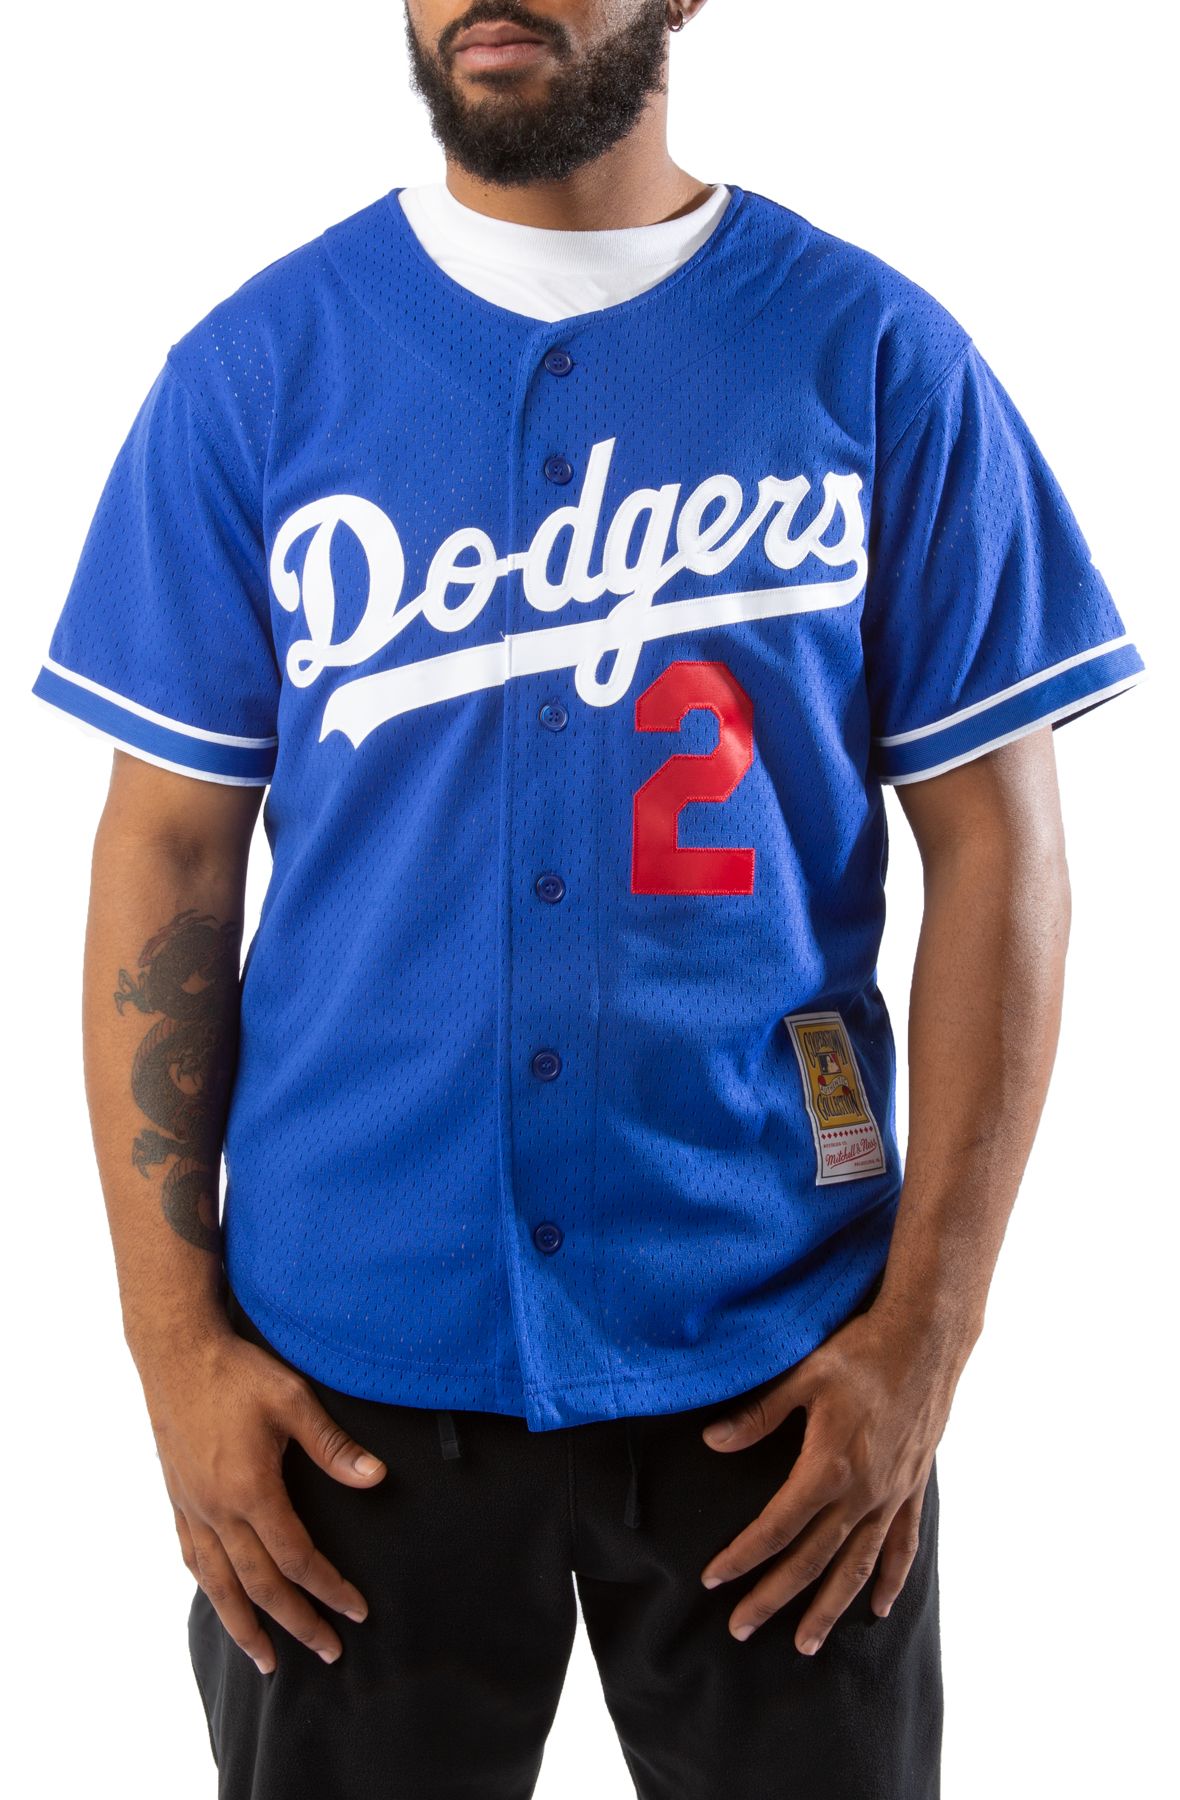 LOS ANGELES DODGERS MLB REPLICA JERSEY - ROYAL MENS